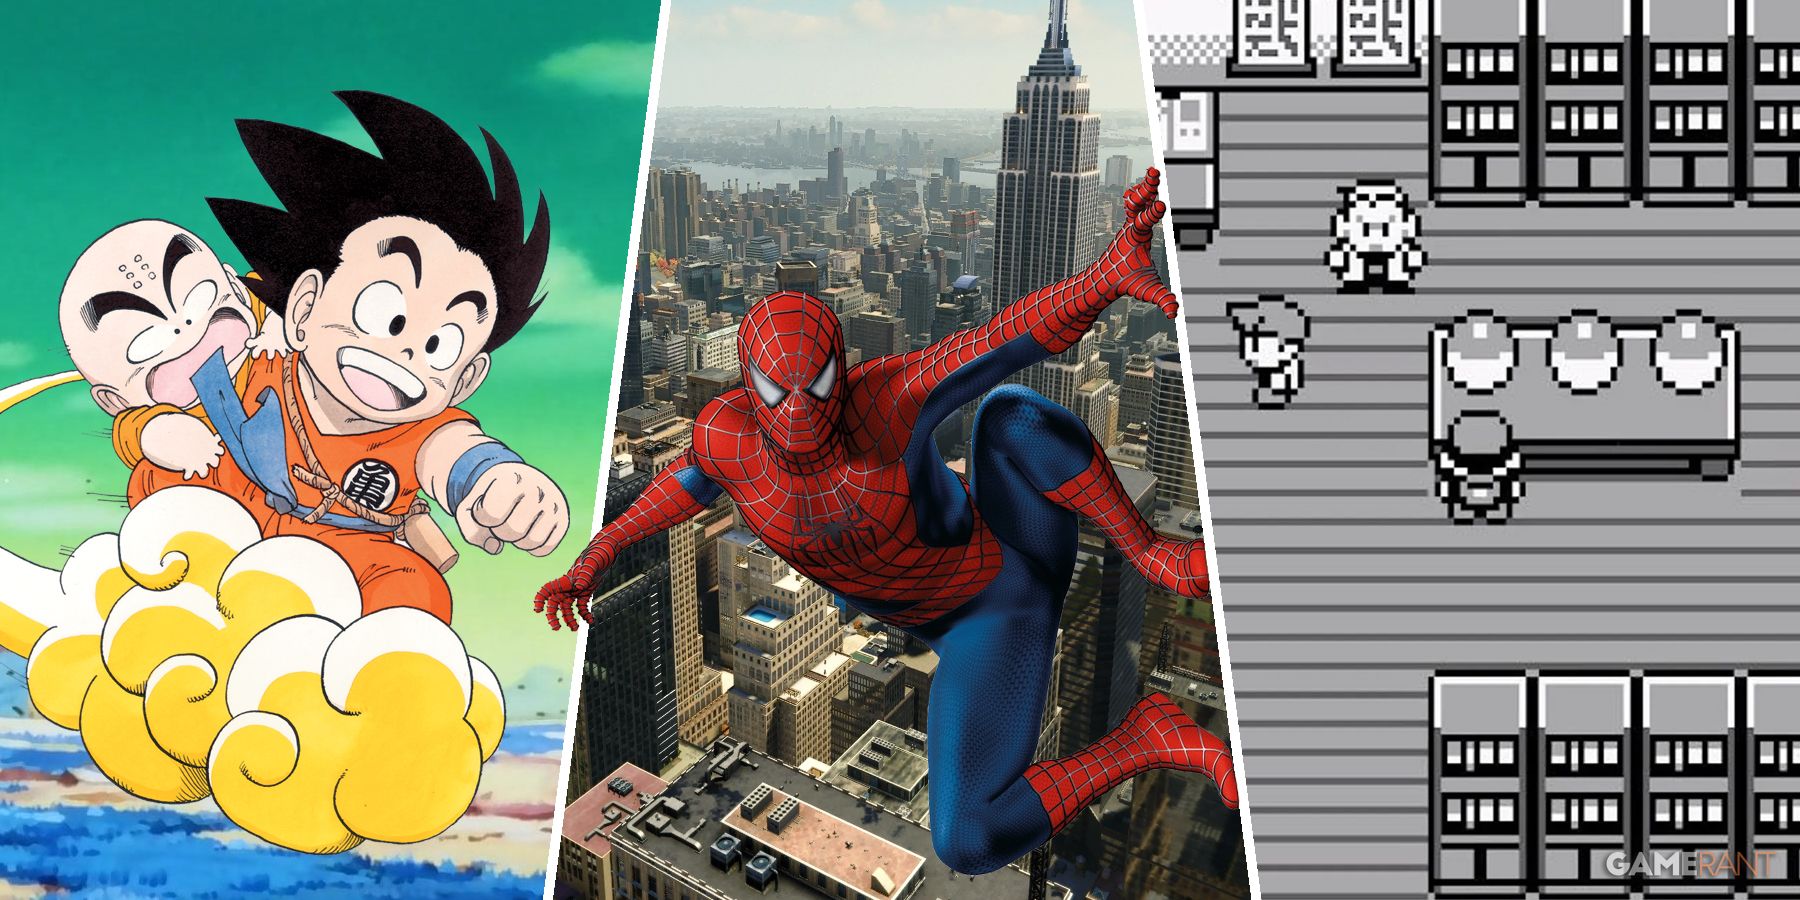 Dragon Ball, Spider-Man, and Pokemon